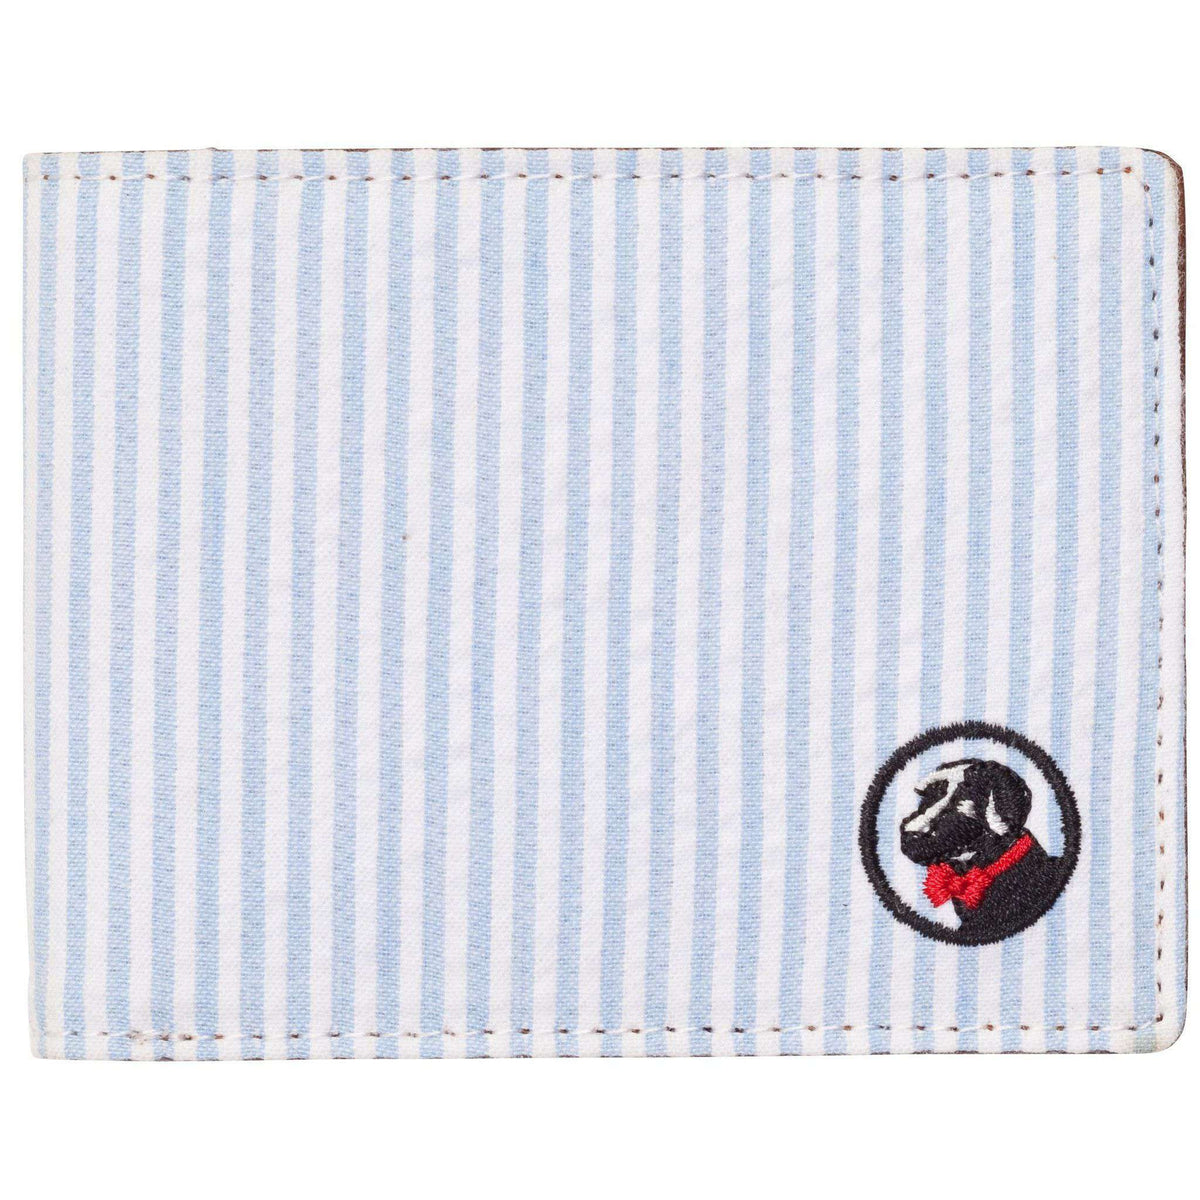 Proper Wallet in Blue/White Seersucker by Southern Proper - Country Club Prep